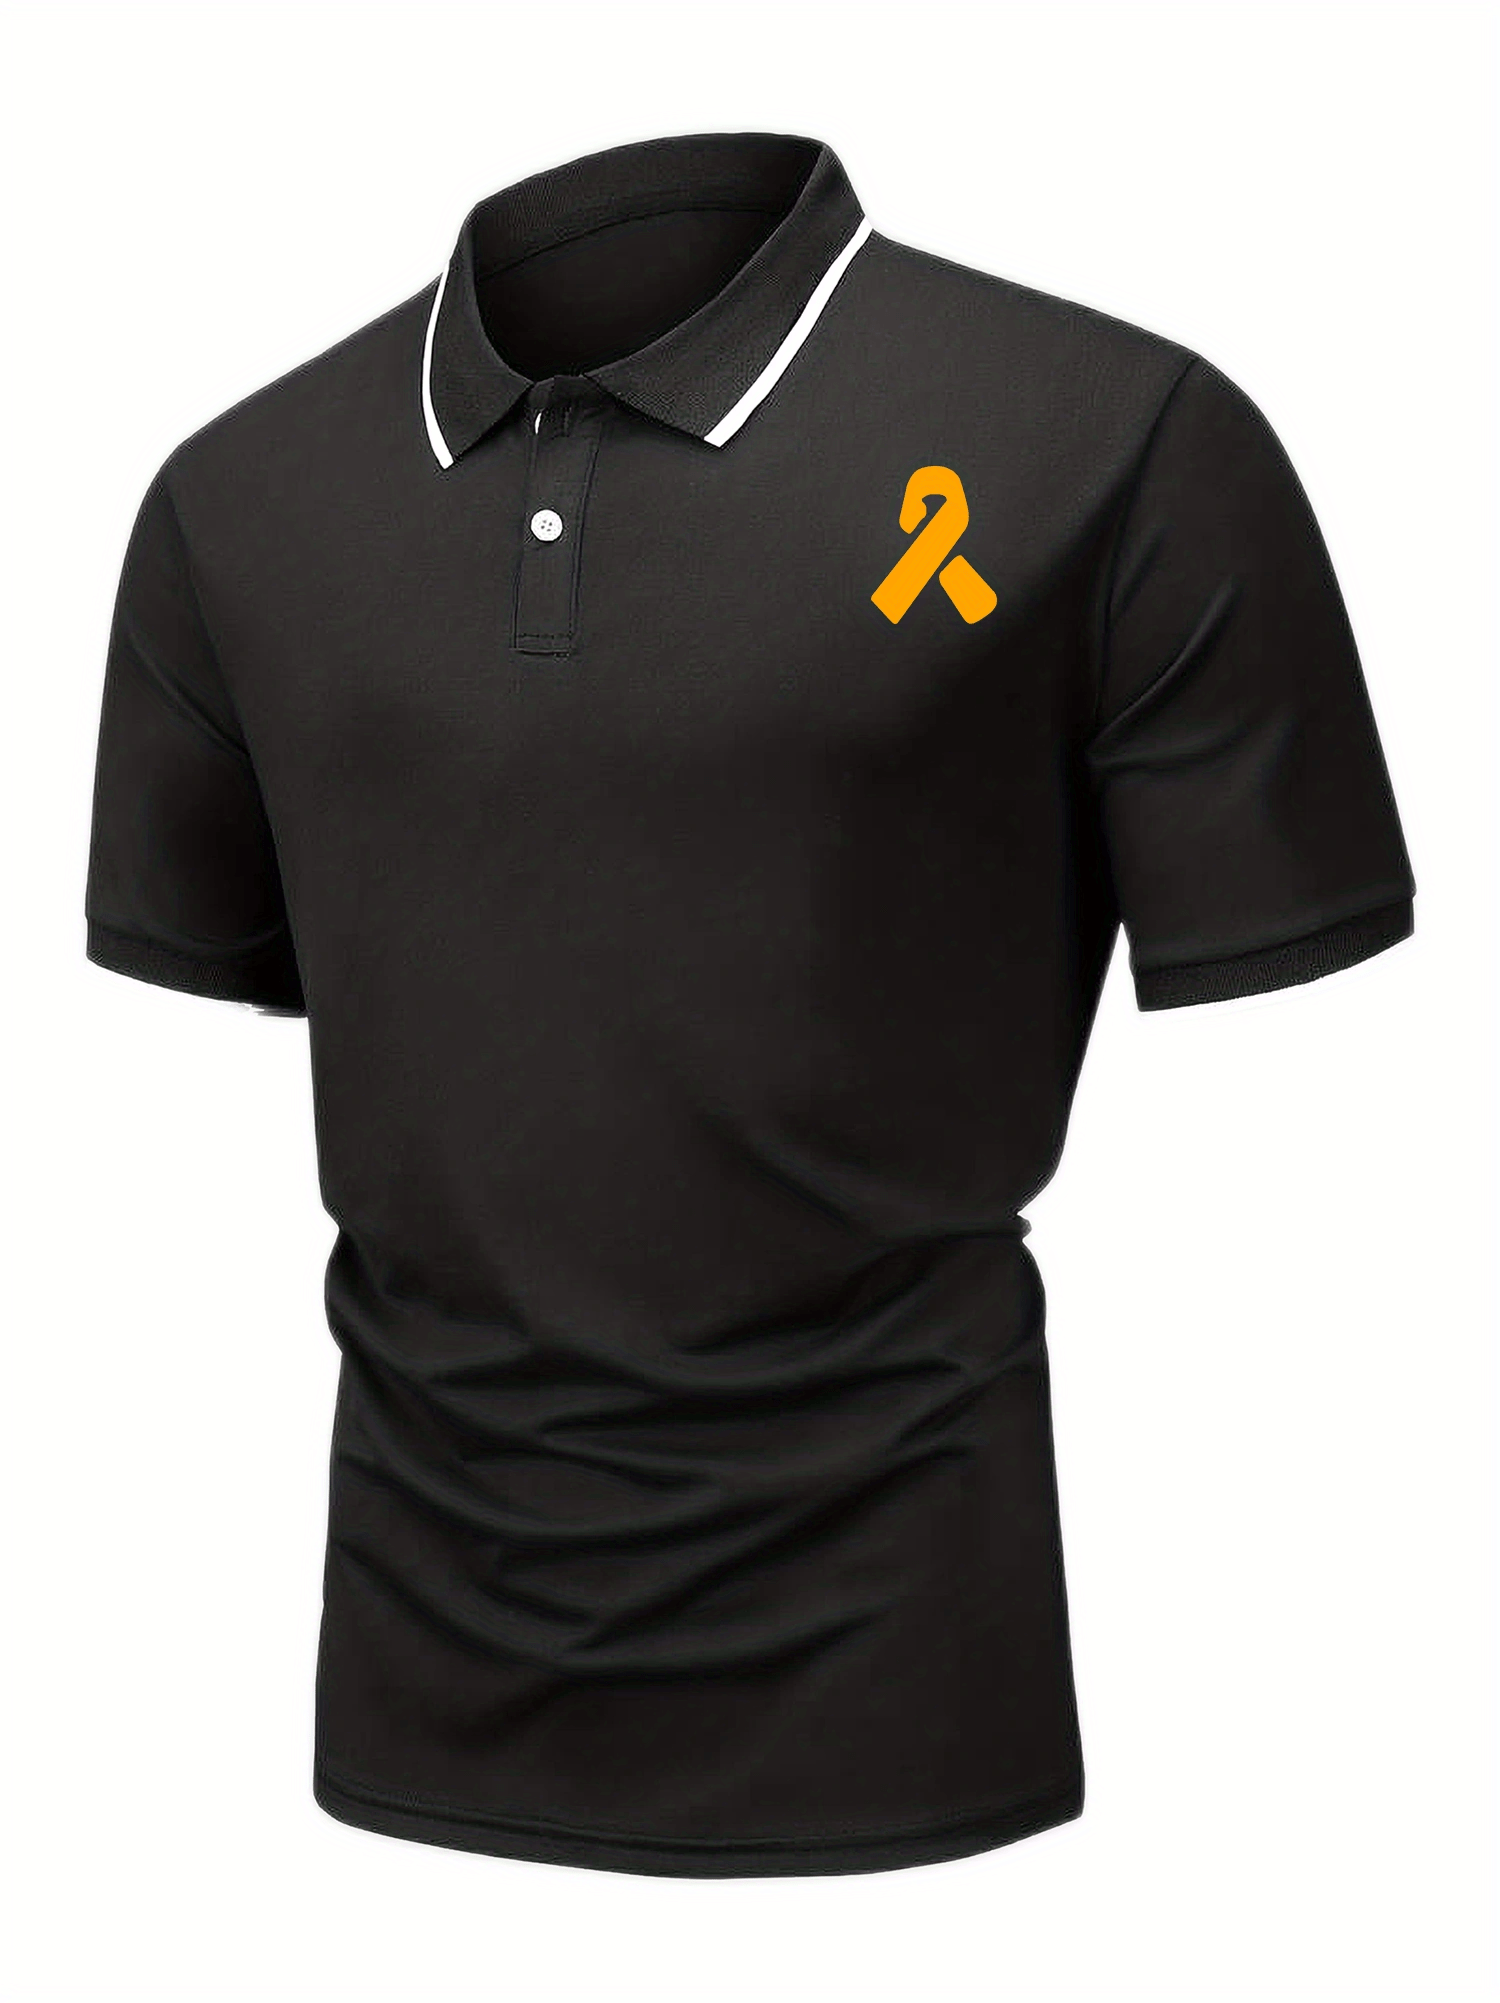 Men's Short Sleeve Ribbon Shirt